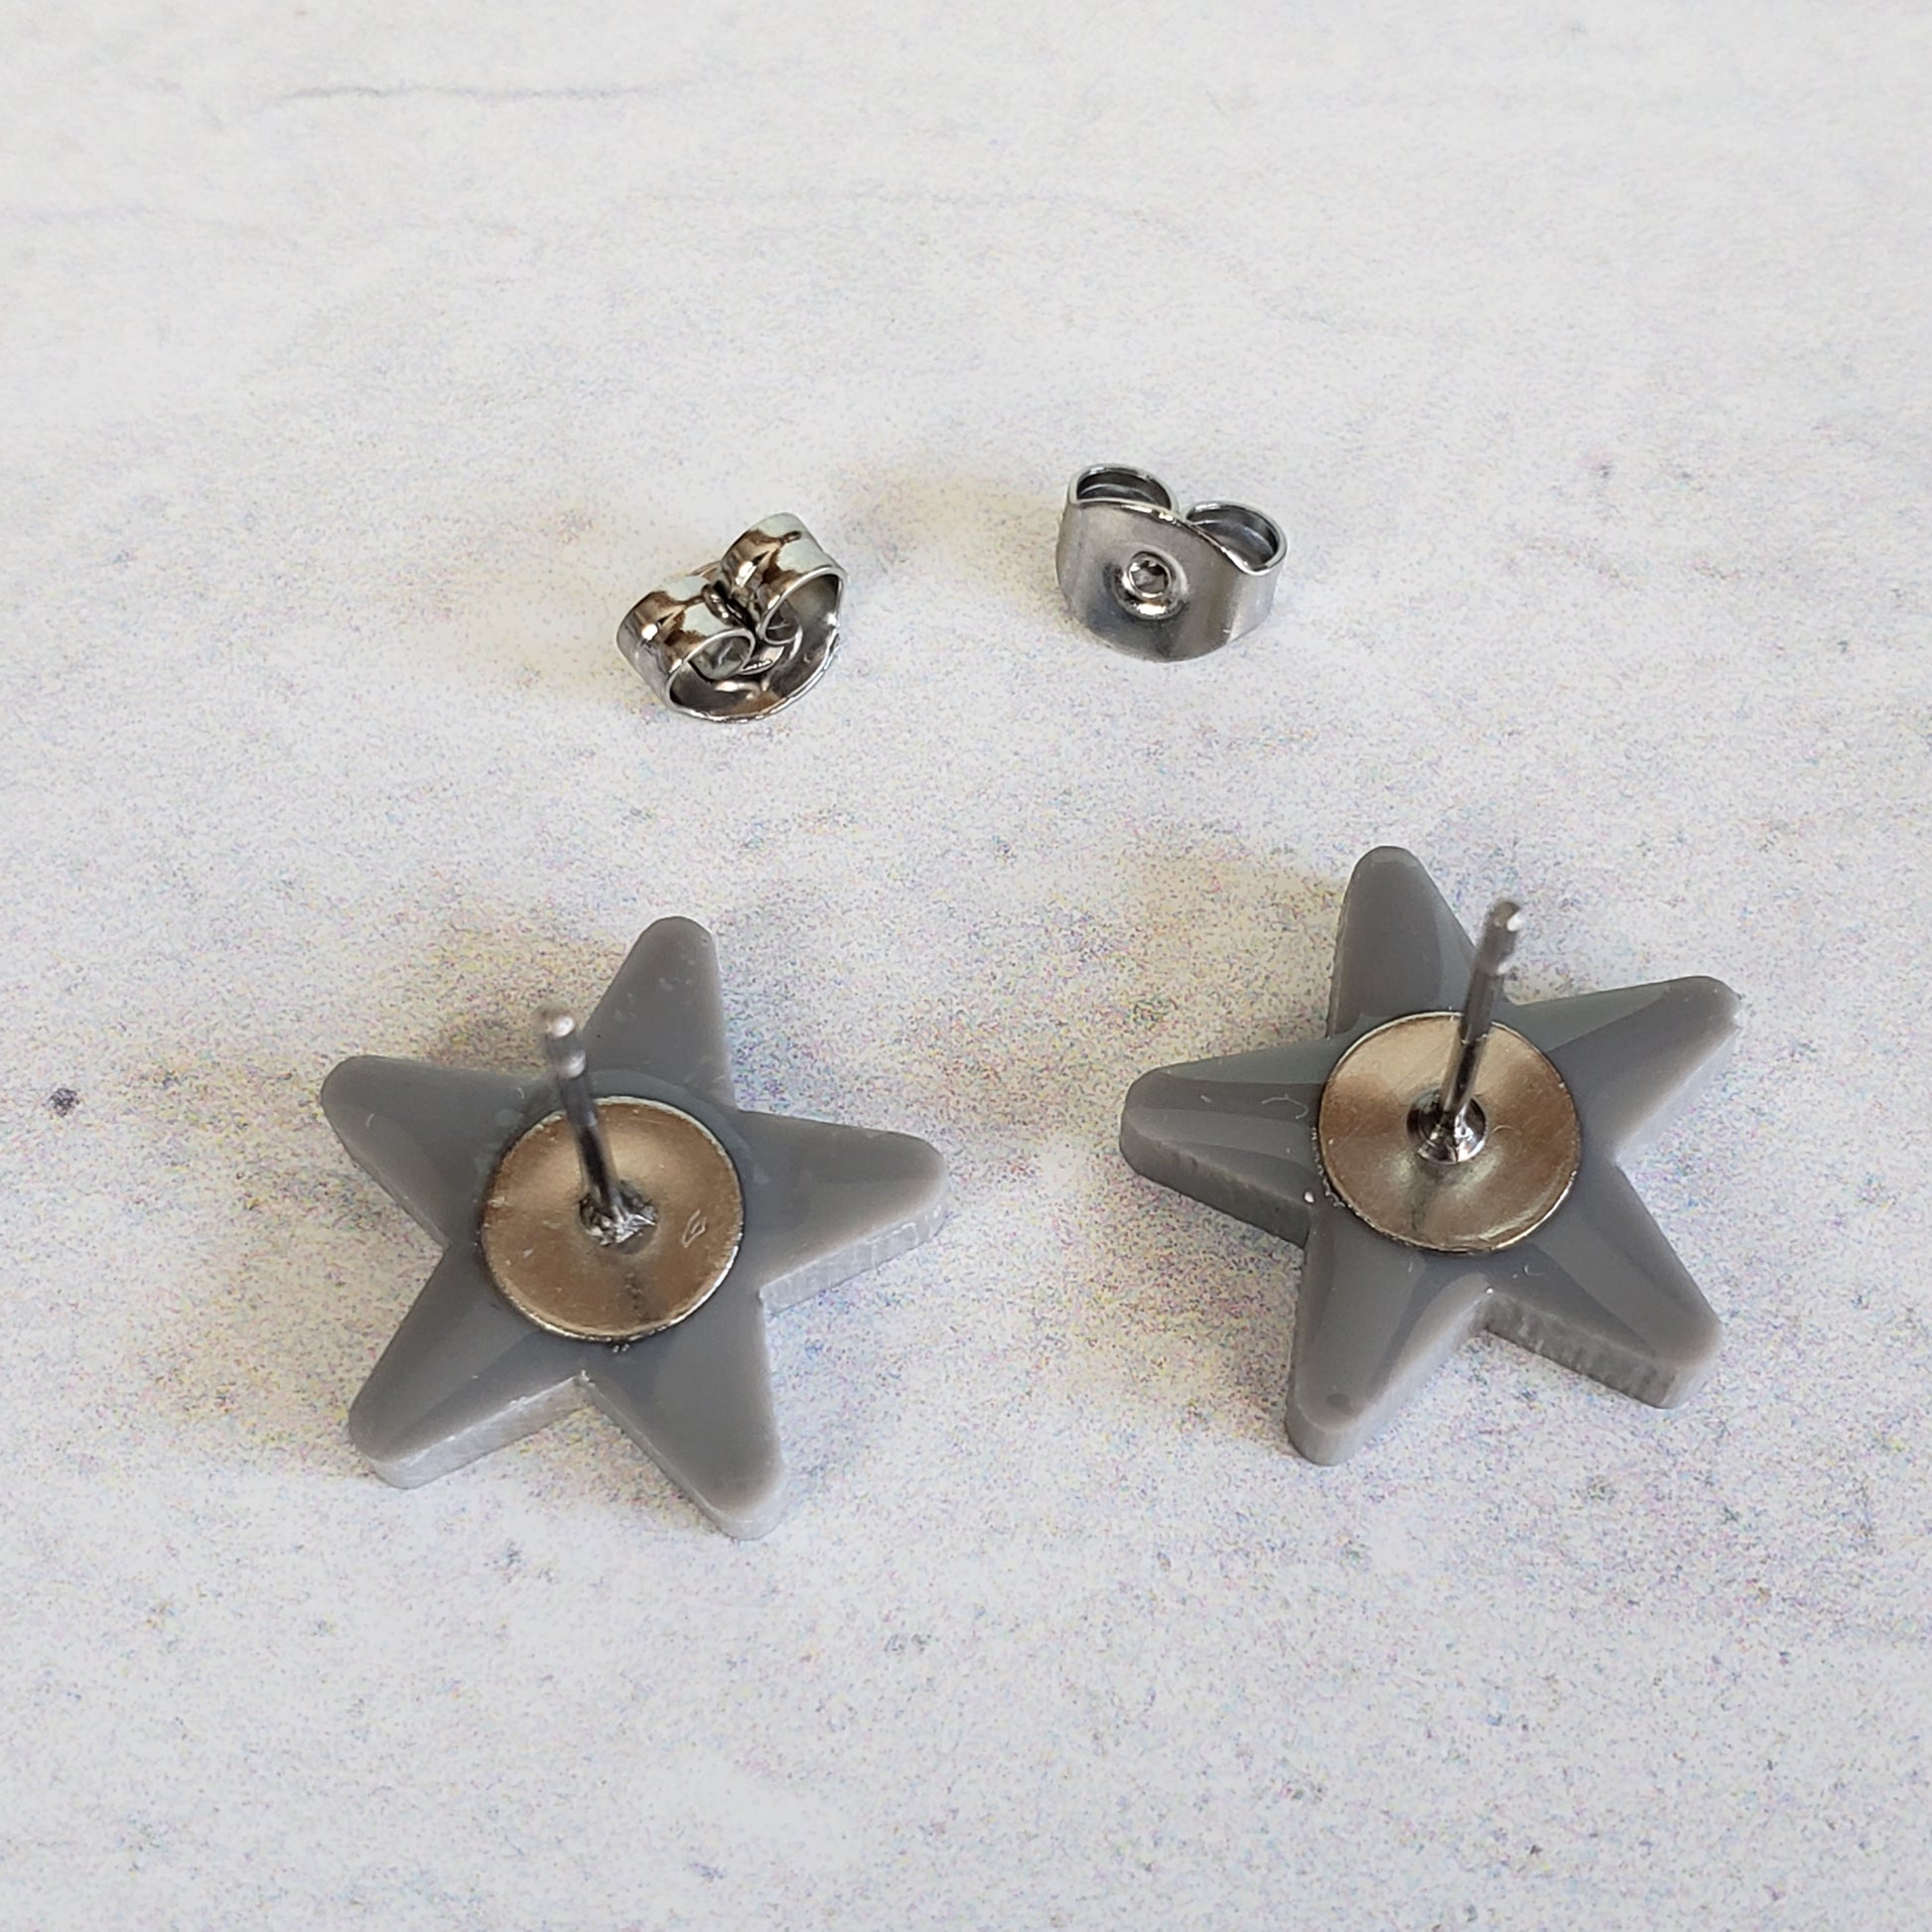 Backside of gray star stud earrings showing posts